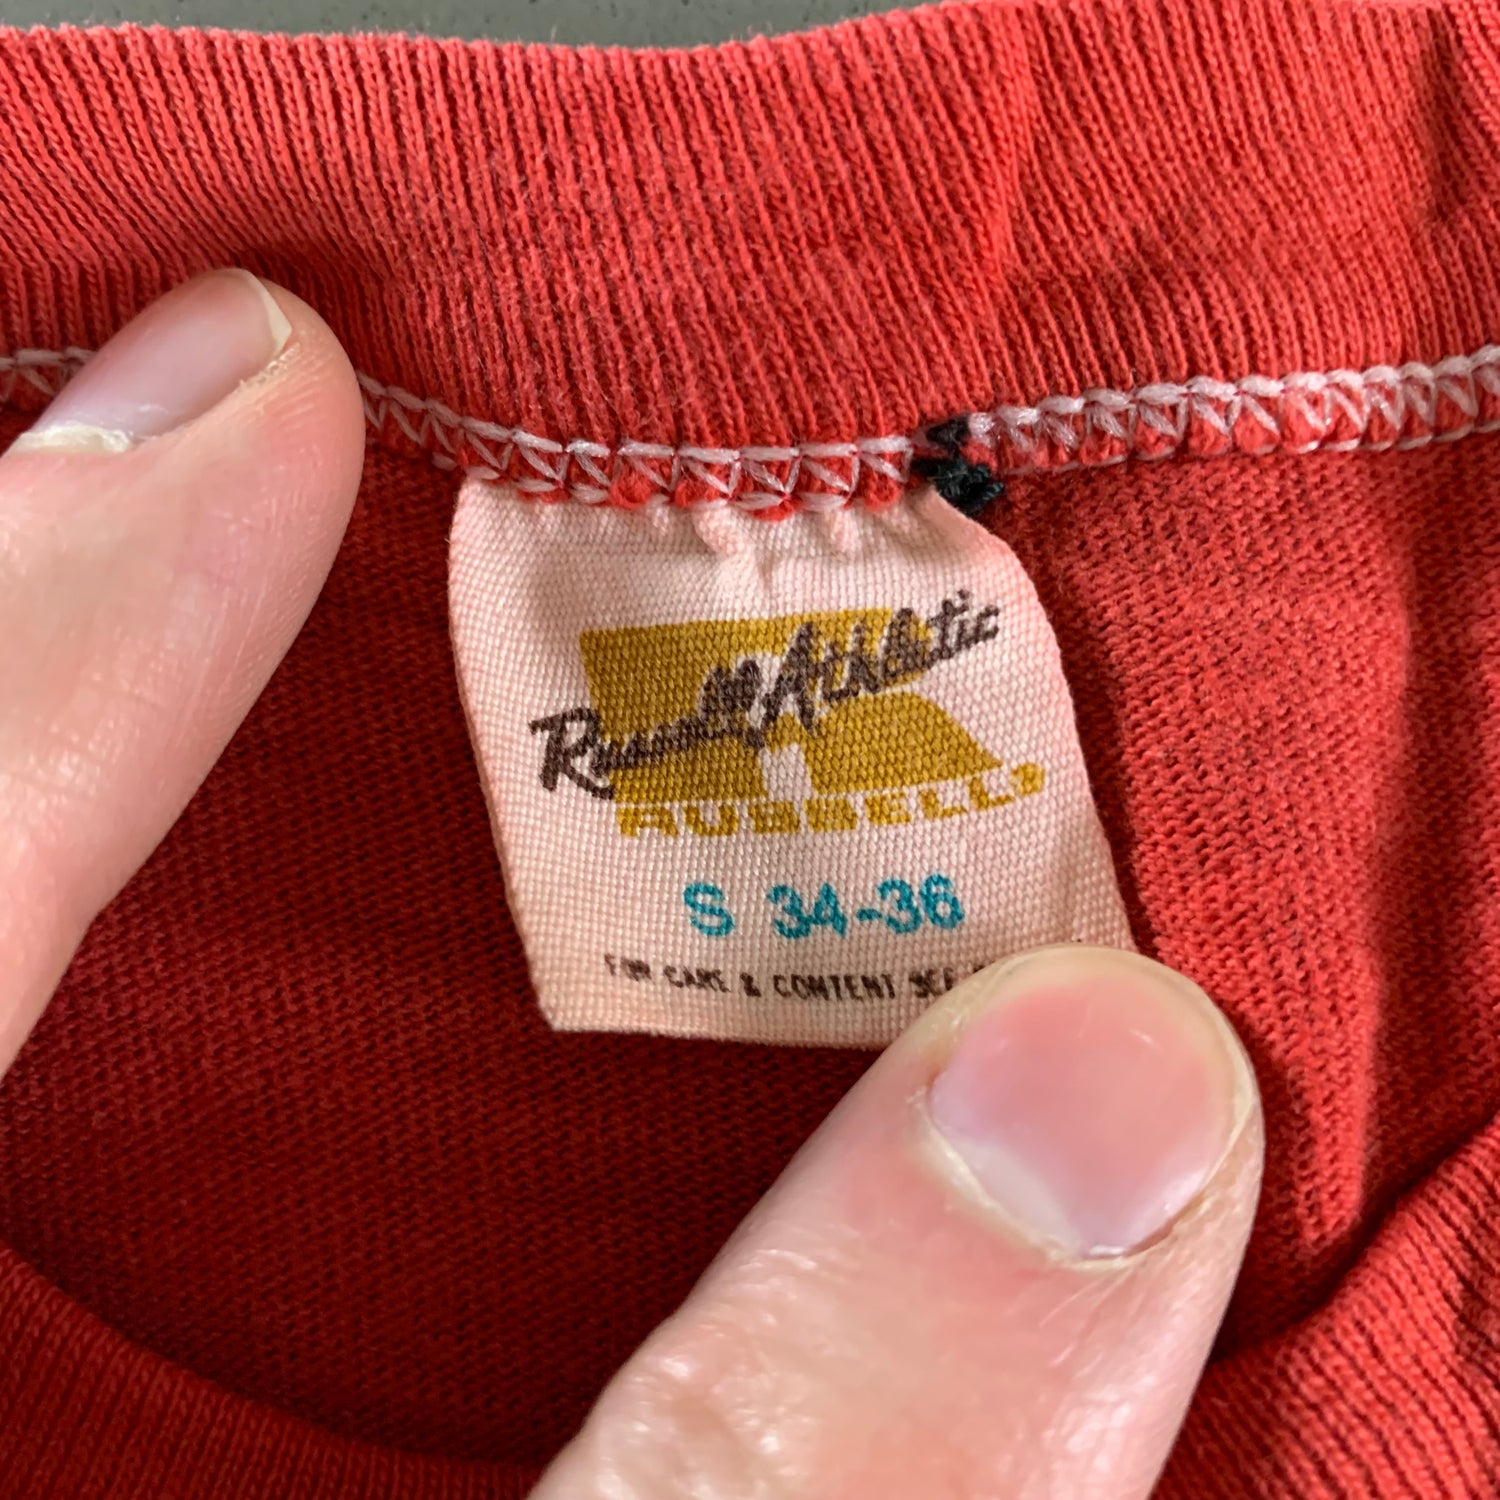 Vintage 1981 Womens Softball T-shirt size Small